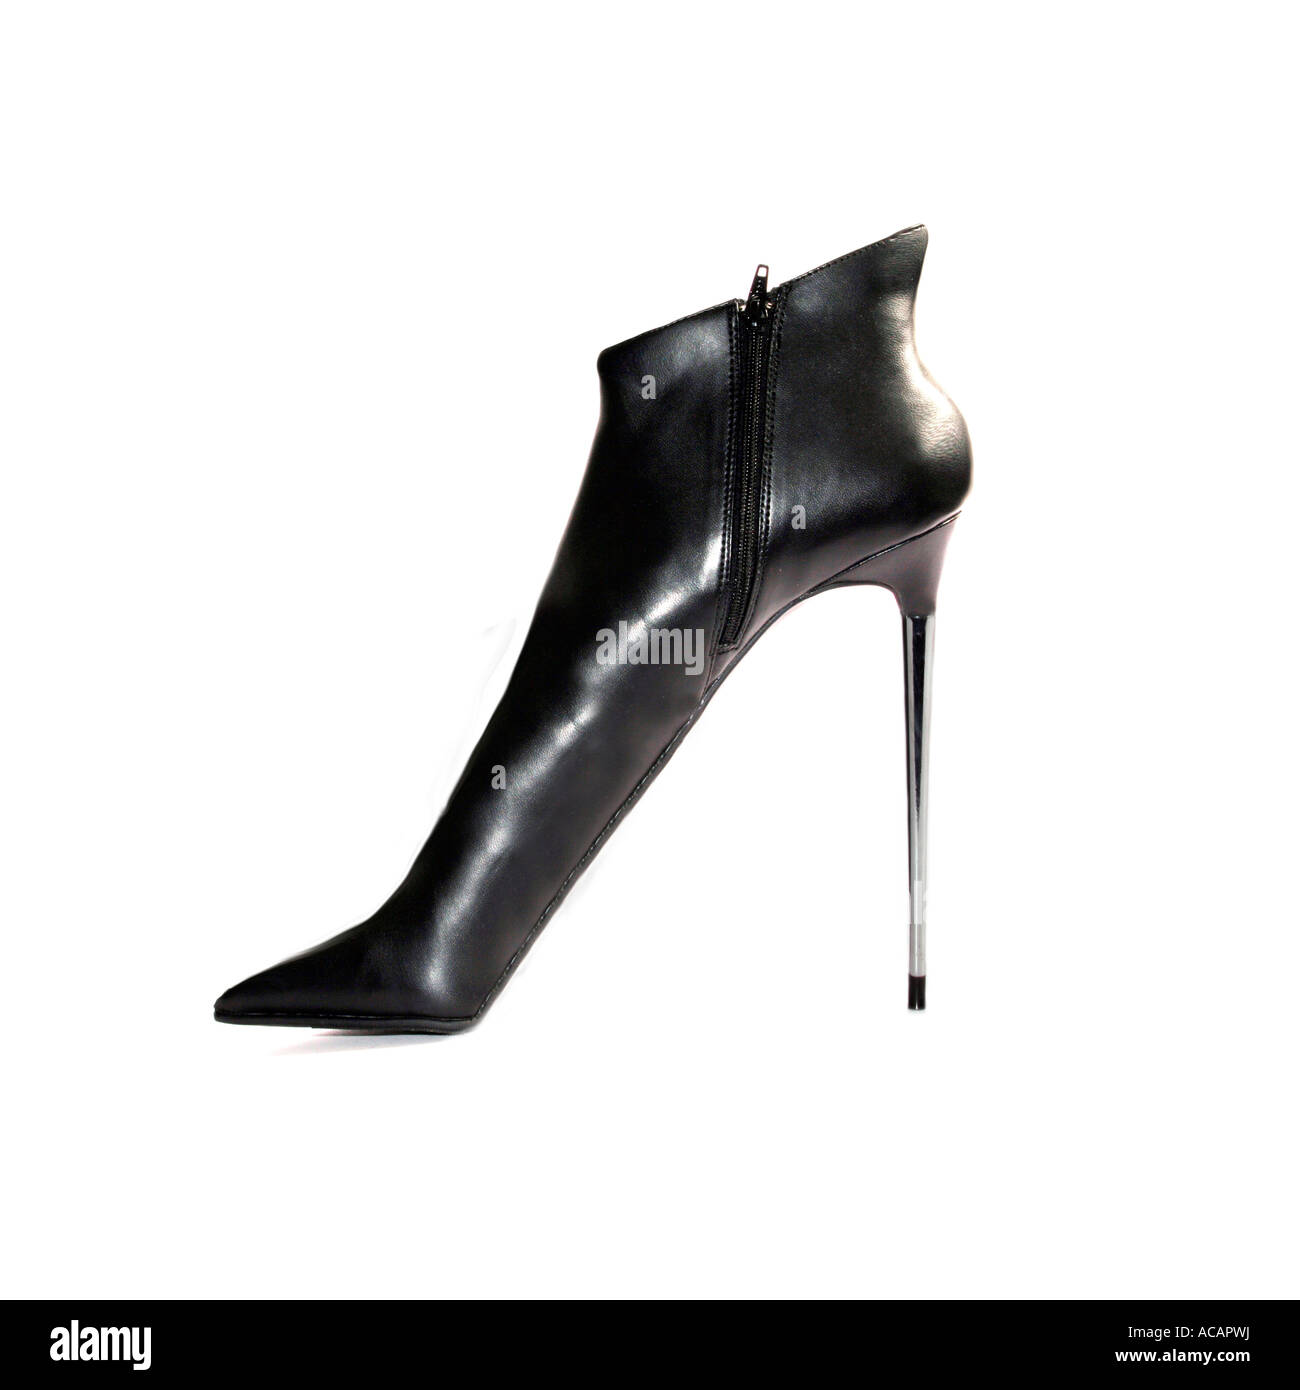 Black lady's shoe Stock Photo